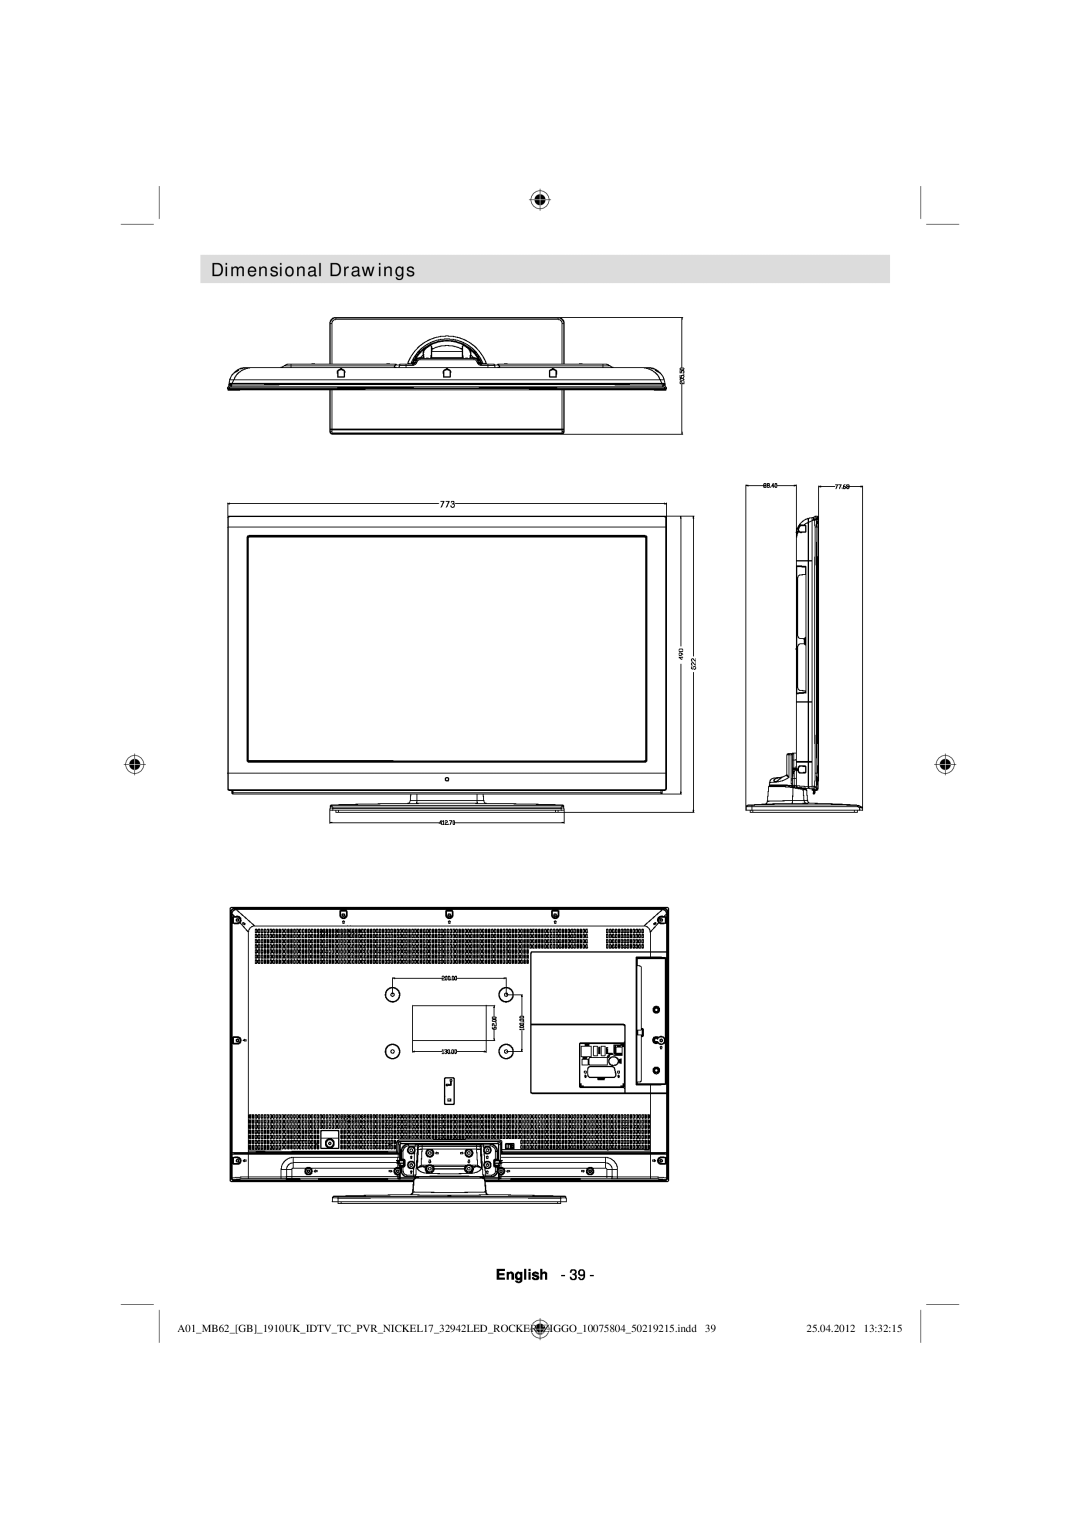 Sharp LC-32LE240E operation manual Dimensional Drawings, English, 25.04.2012 